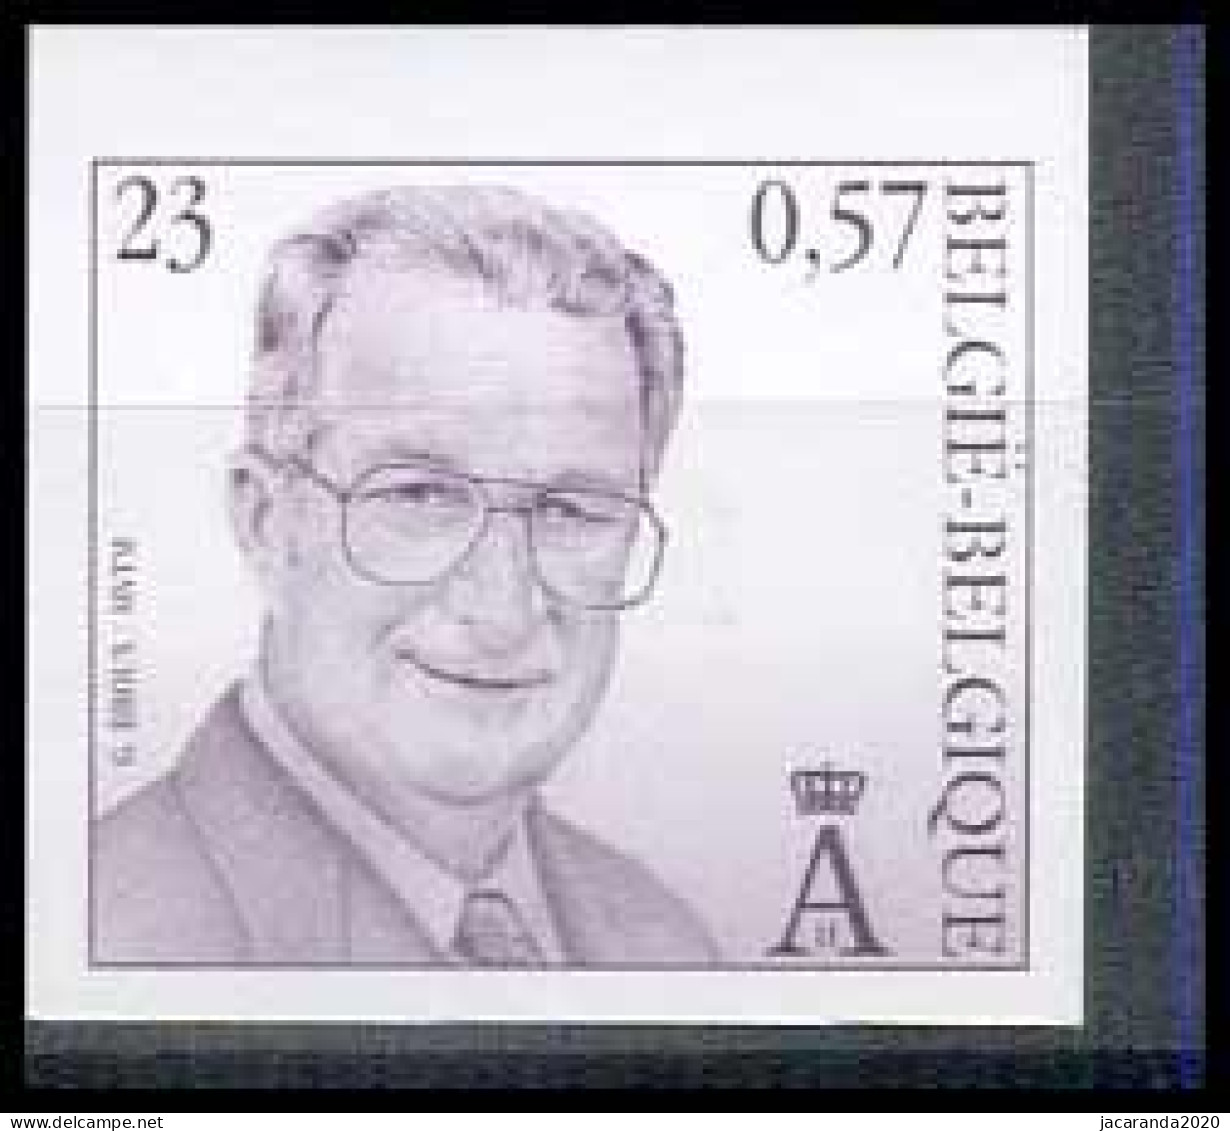 België 2933 ON - Koning Albert II - Roi Albert II - Rolzegel - Timbre Rouleau - 1981-2000